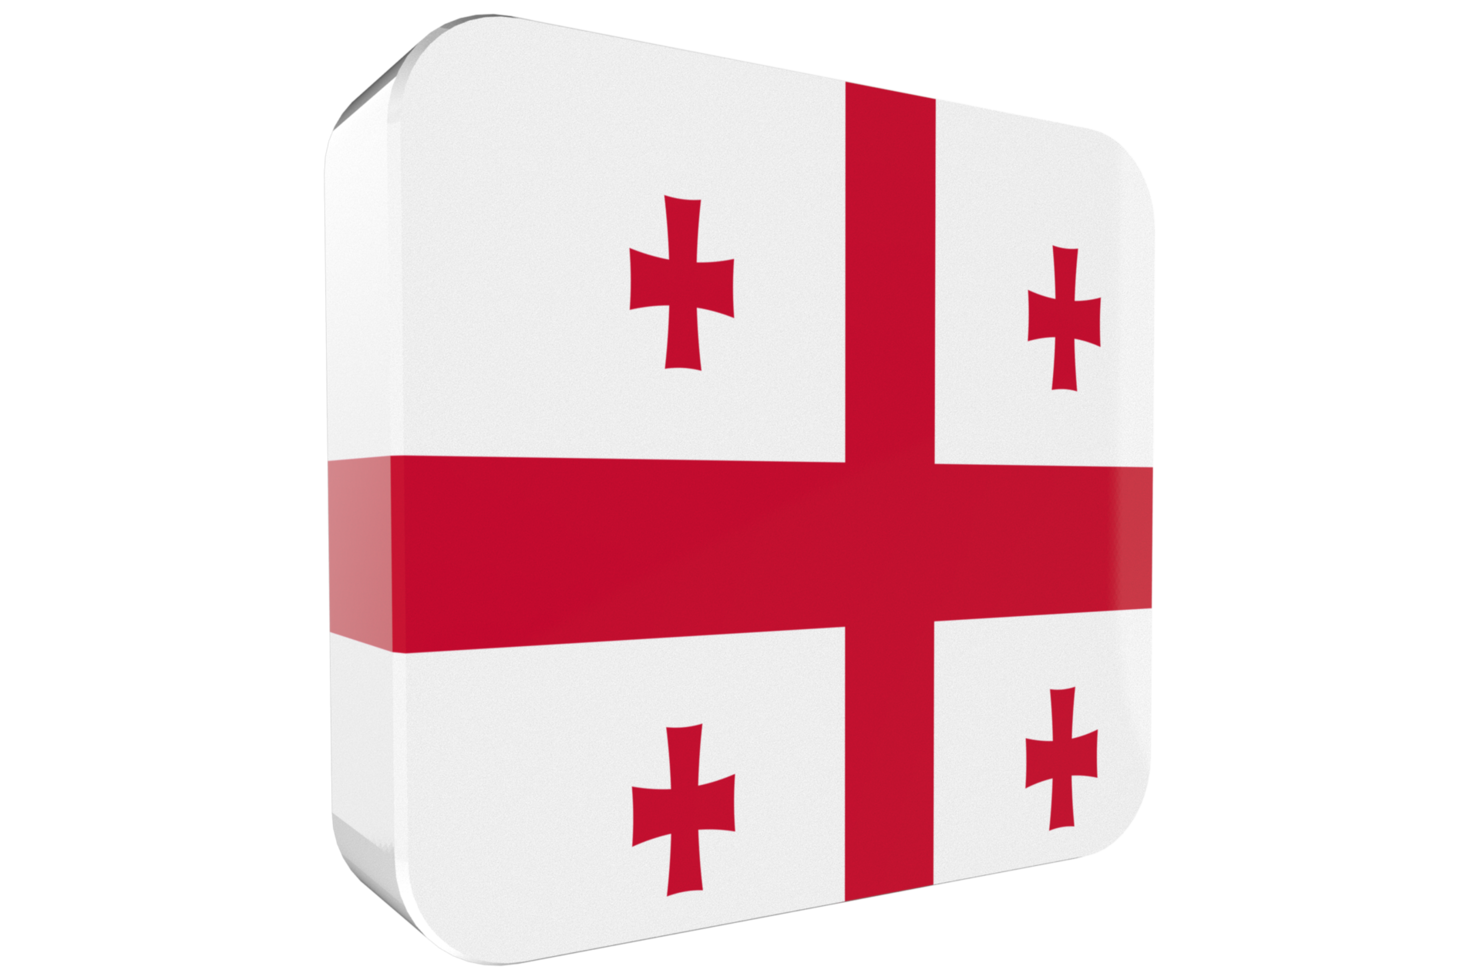 georgia, icono de bandera 3d sobre fondo png